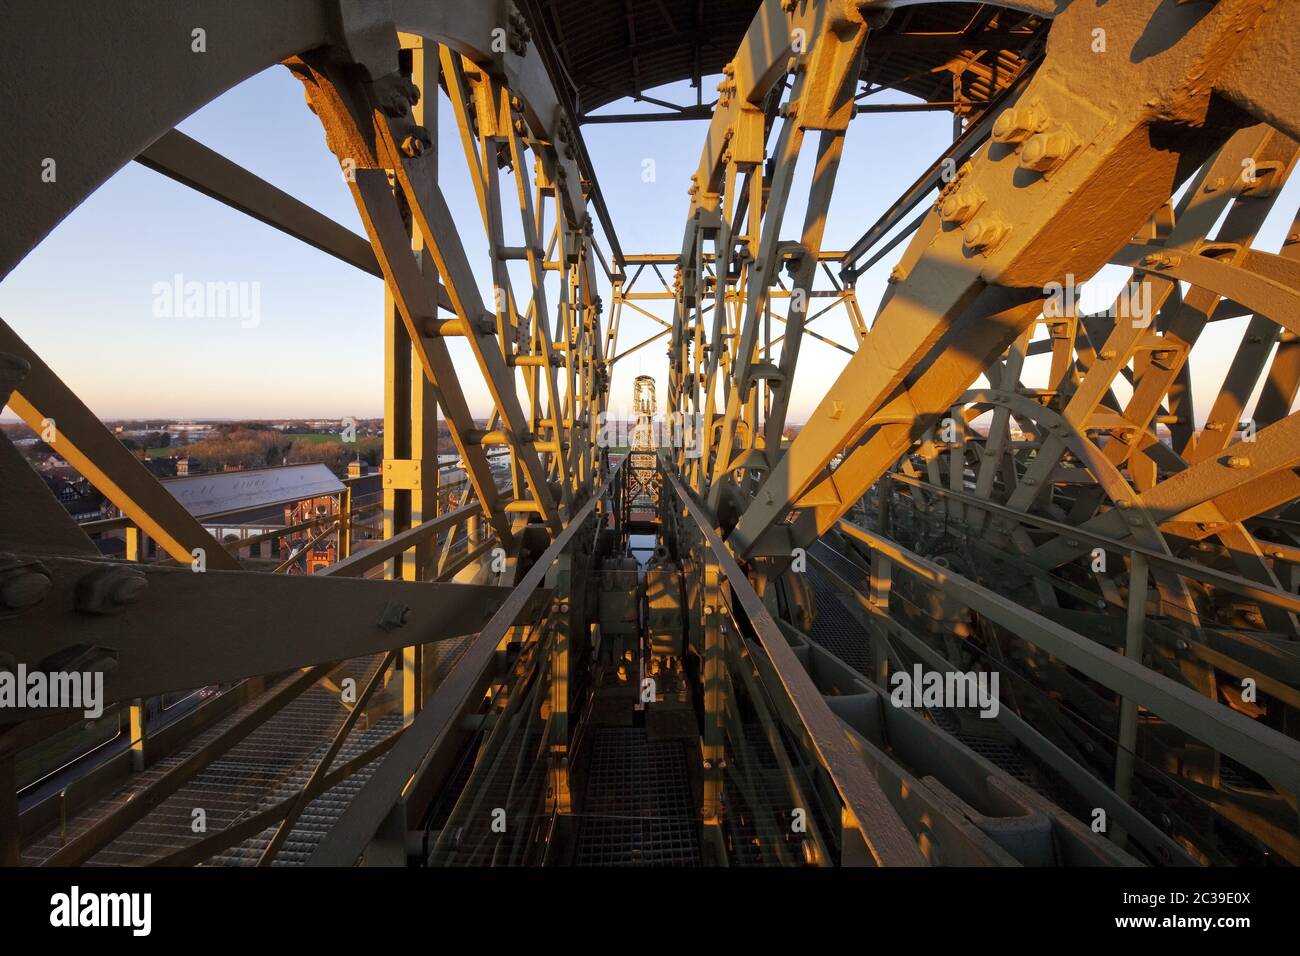 View from the conveyor shaft II to the conveyor shaft IV, Zeche Zollern II / IV, Dortmund, Germany Stock Photo